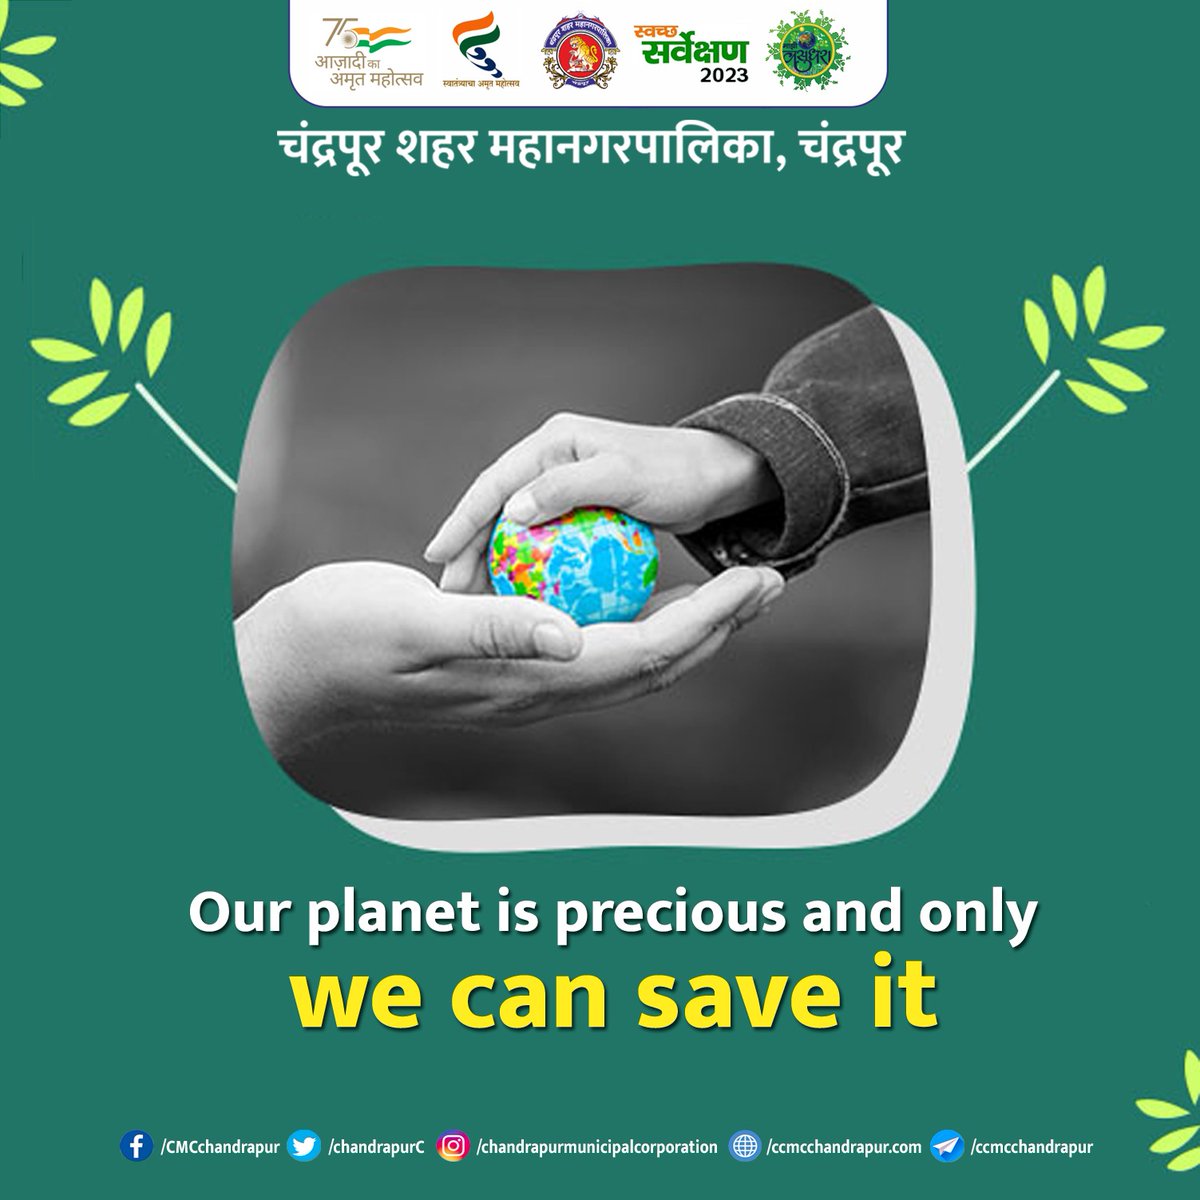 Our planet is precious and only we can save it
#SwachhSurvekshan2023 #SwachhataKeDoRang #MyCityMyPride #Plasticfreecity #GoGreen #IndiavsGarbage #MissionLiFE #ChooseLiFE #environment #climatechange #gogreen #MycityMyResponsibility #SwachhBharatMaharashtraMissionUrban #माझीवसुंधरा